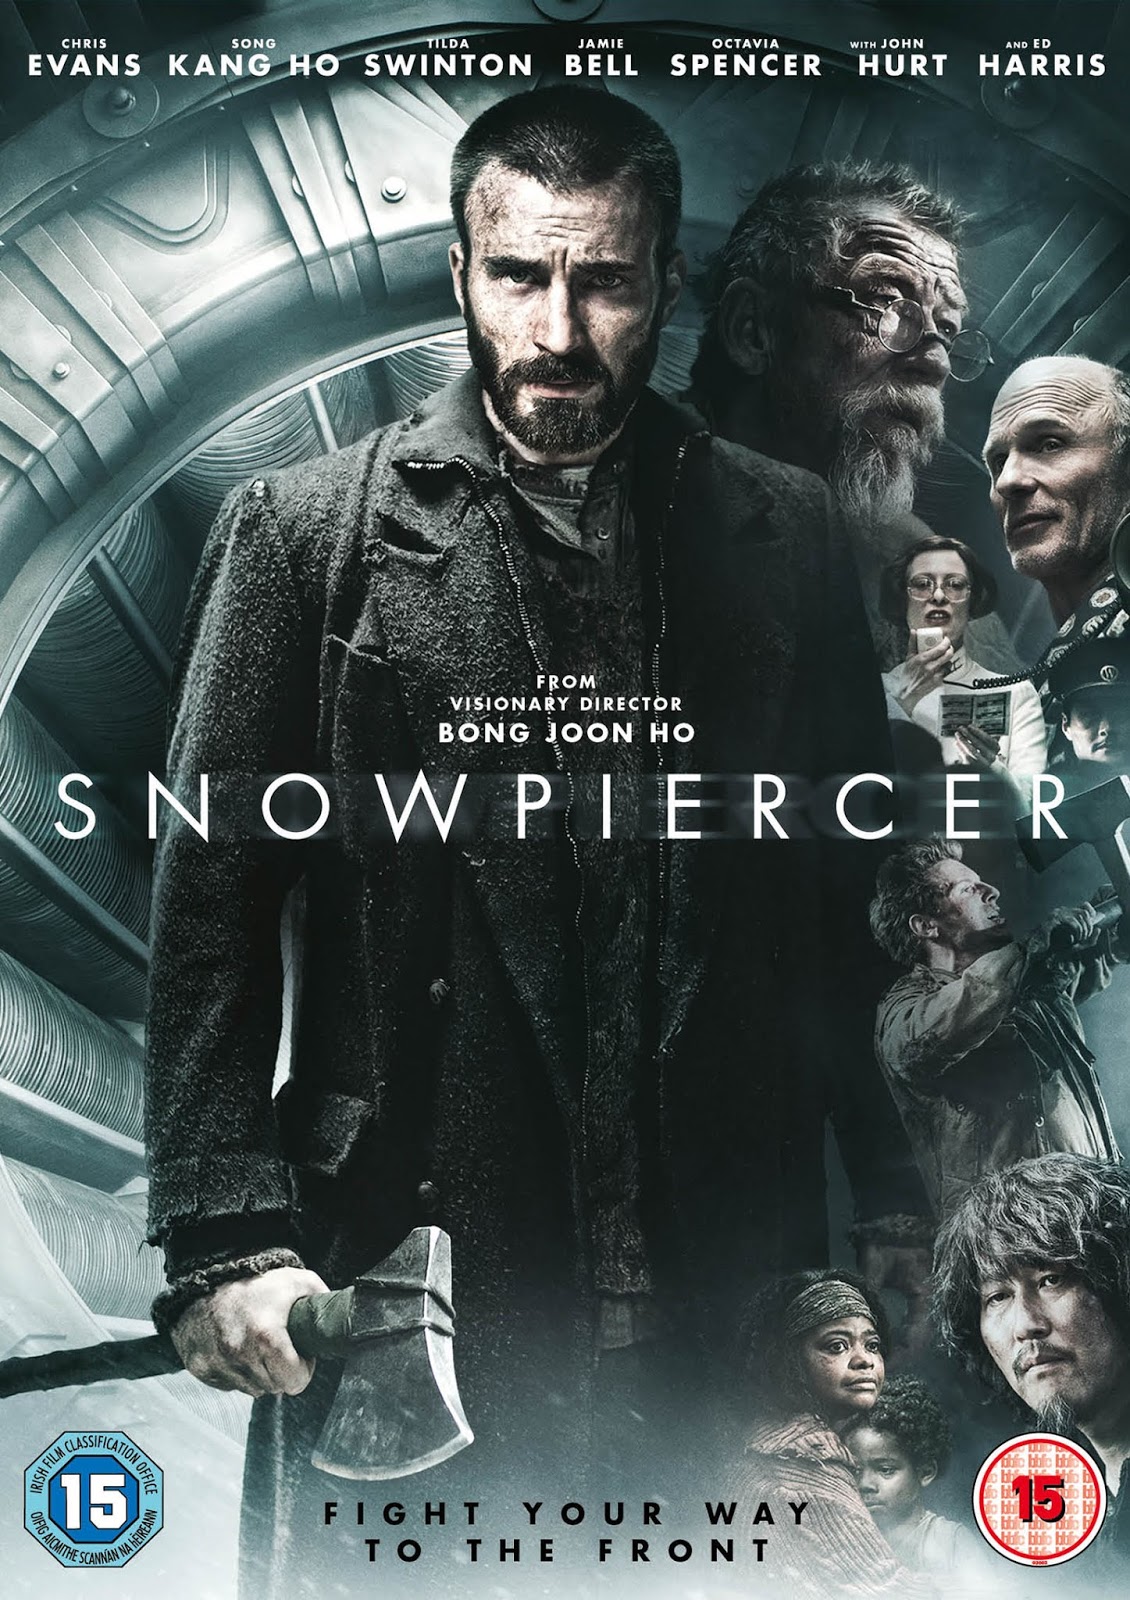 Film - Snowpiercer | The DreamCage